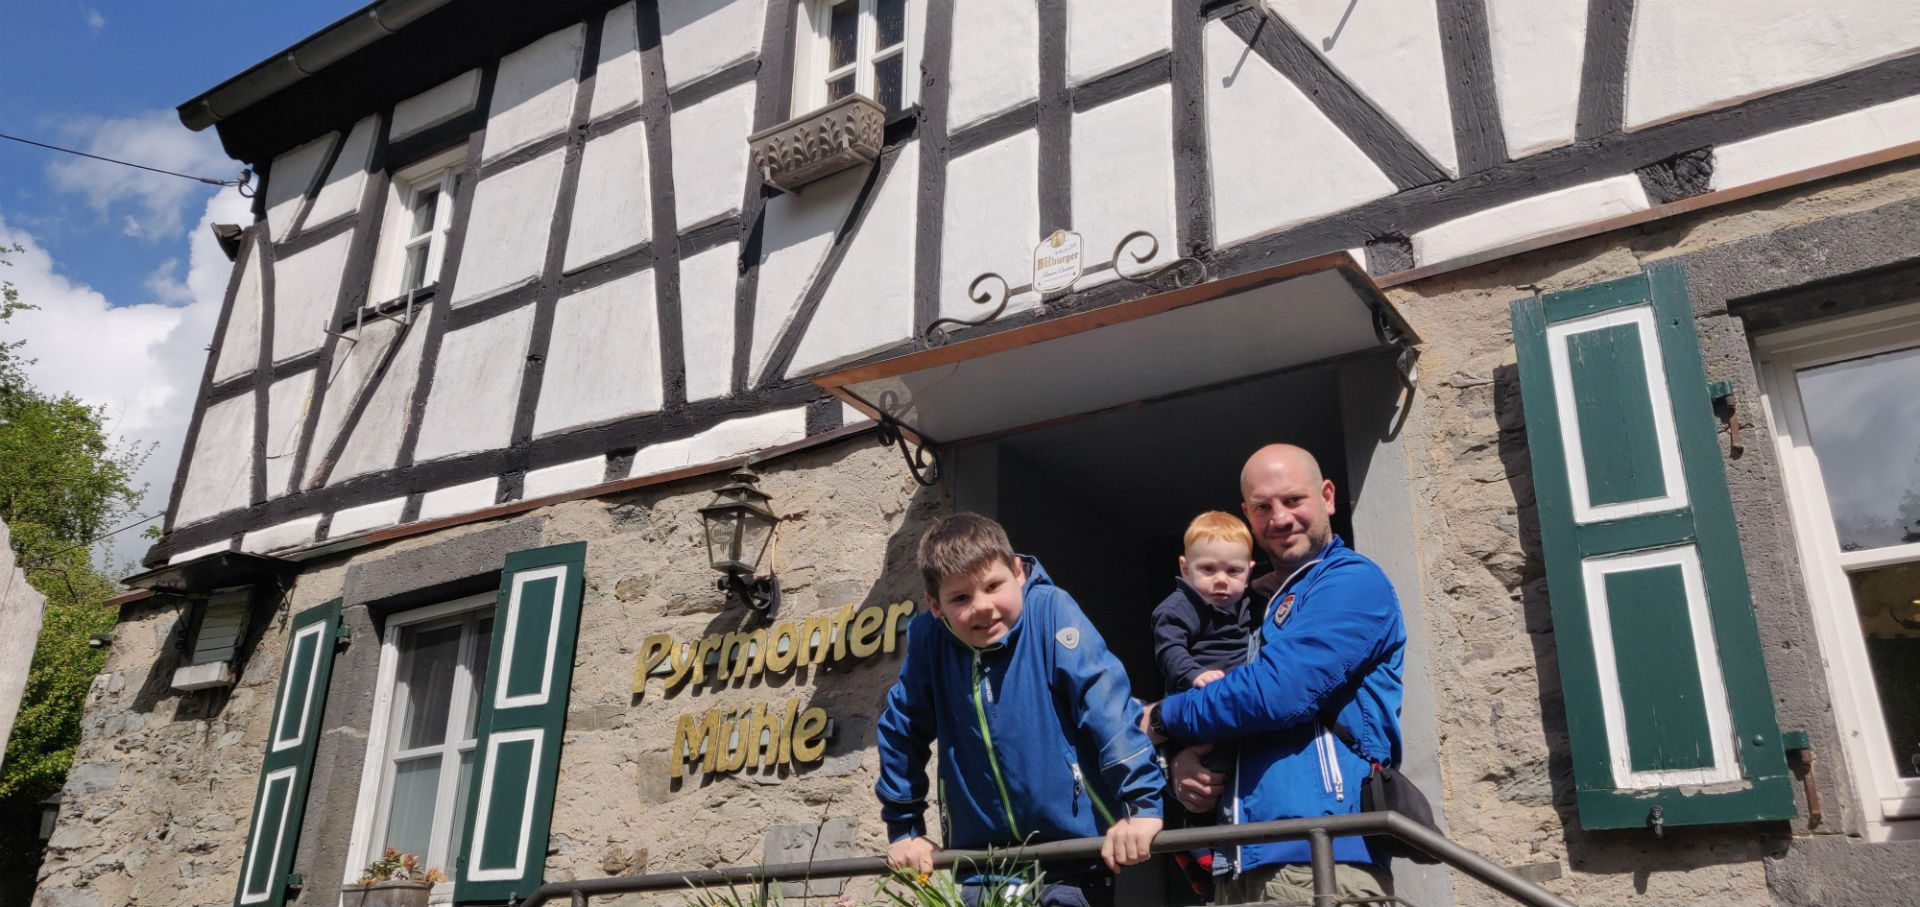 Pyrmonter Mühle restaurant Eifel met kinderen